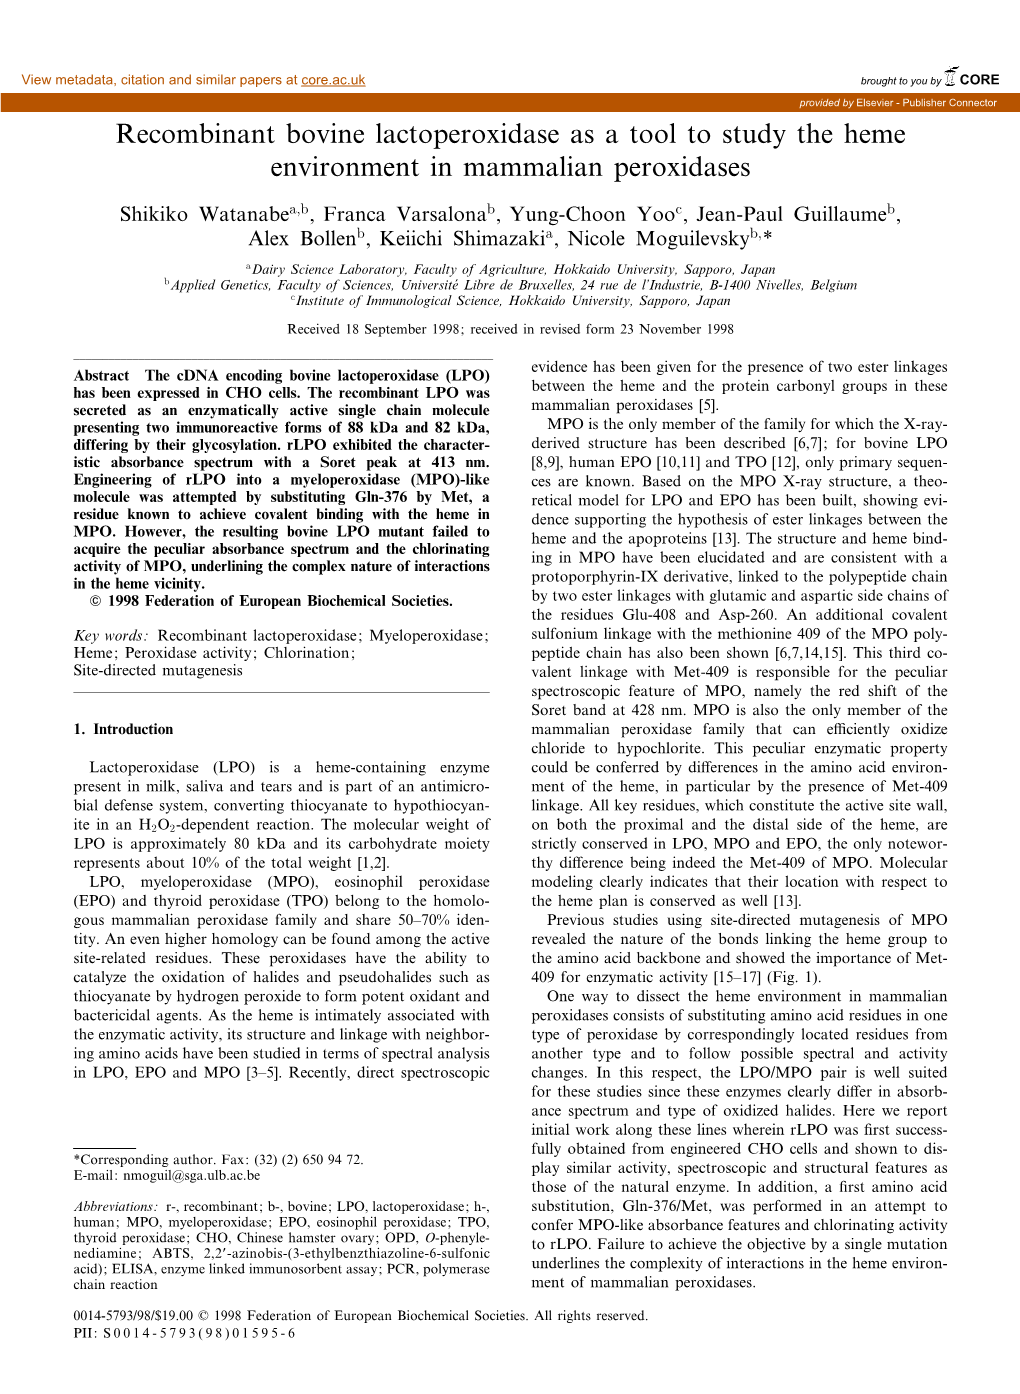 Recombinant Bovine Lactoperoxidase As a Tool to Study the Heme Environment in Mammalian Peroxidases